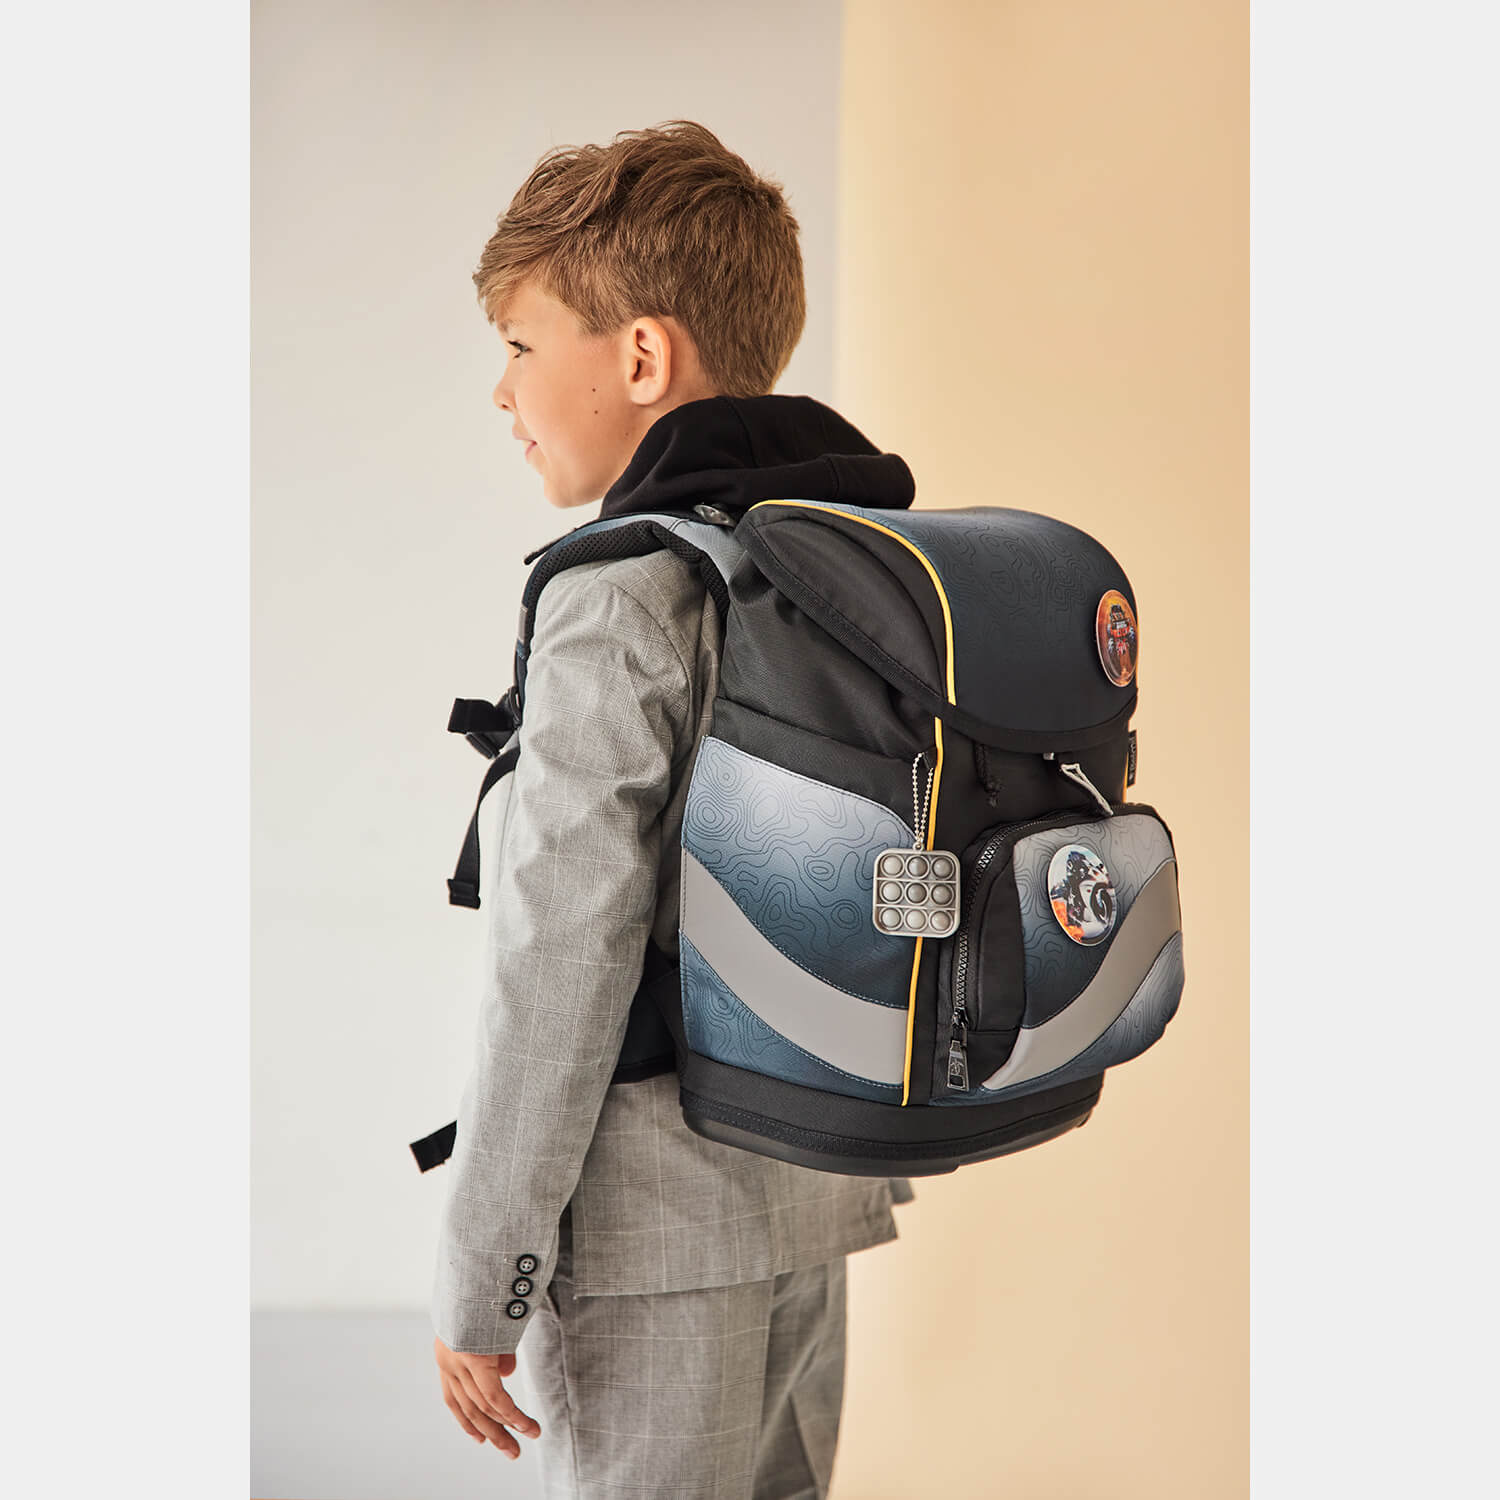 Smarty Plus Black Grey Schoolbag set 5pcs.